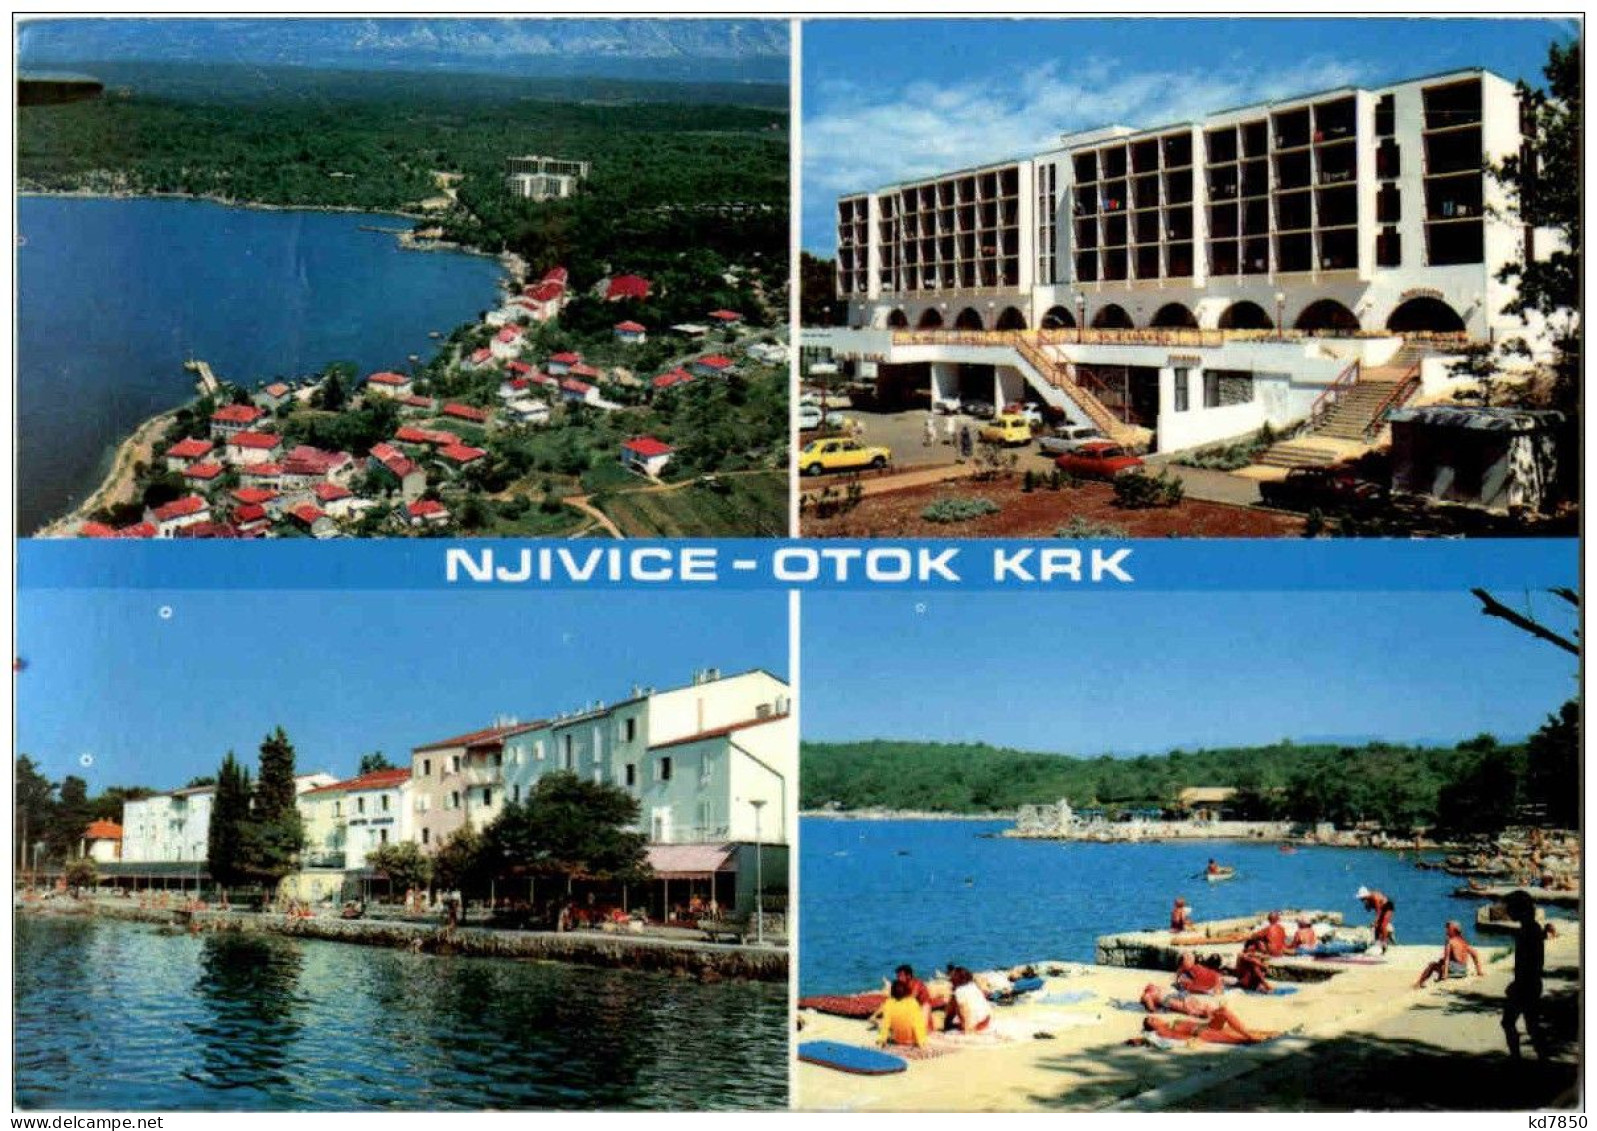 Njivice - Otok Krk - Kroatien